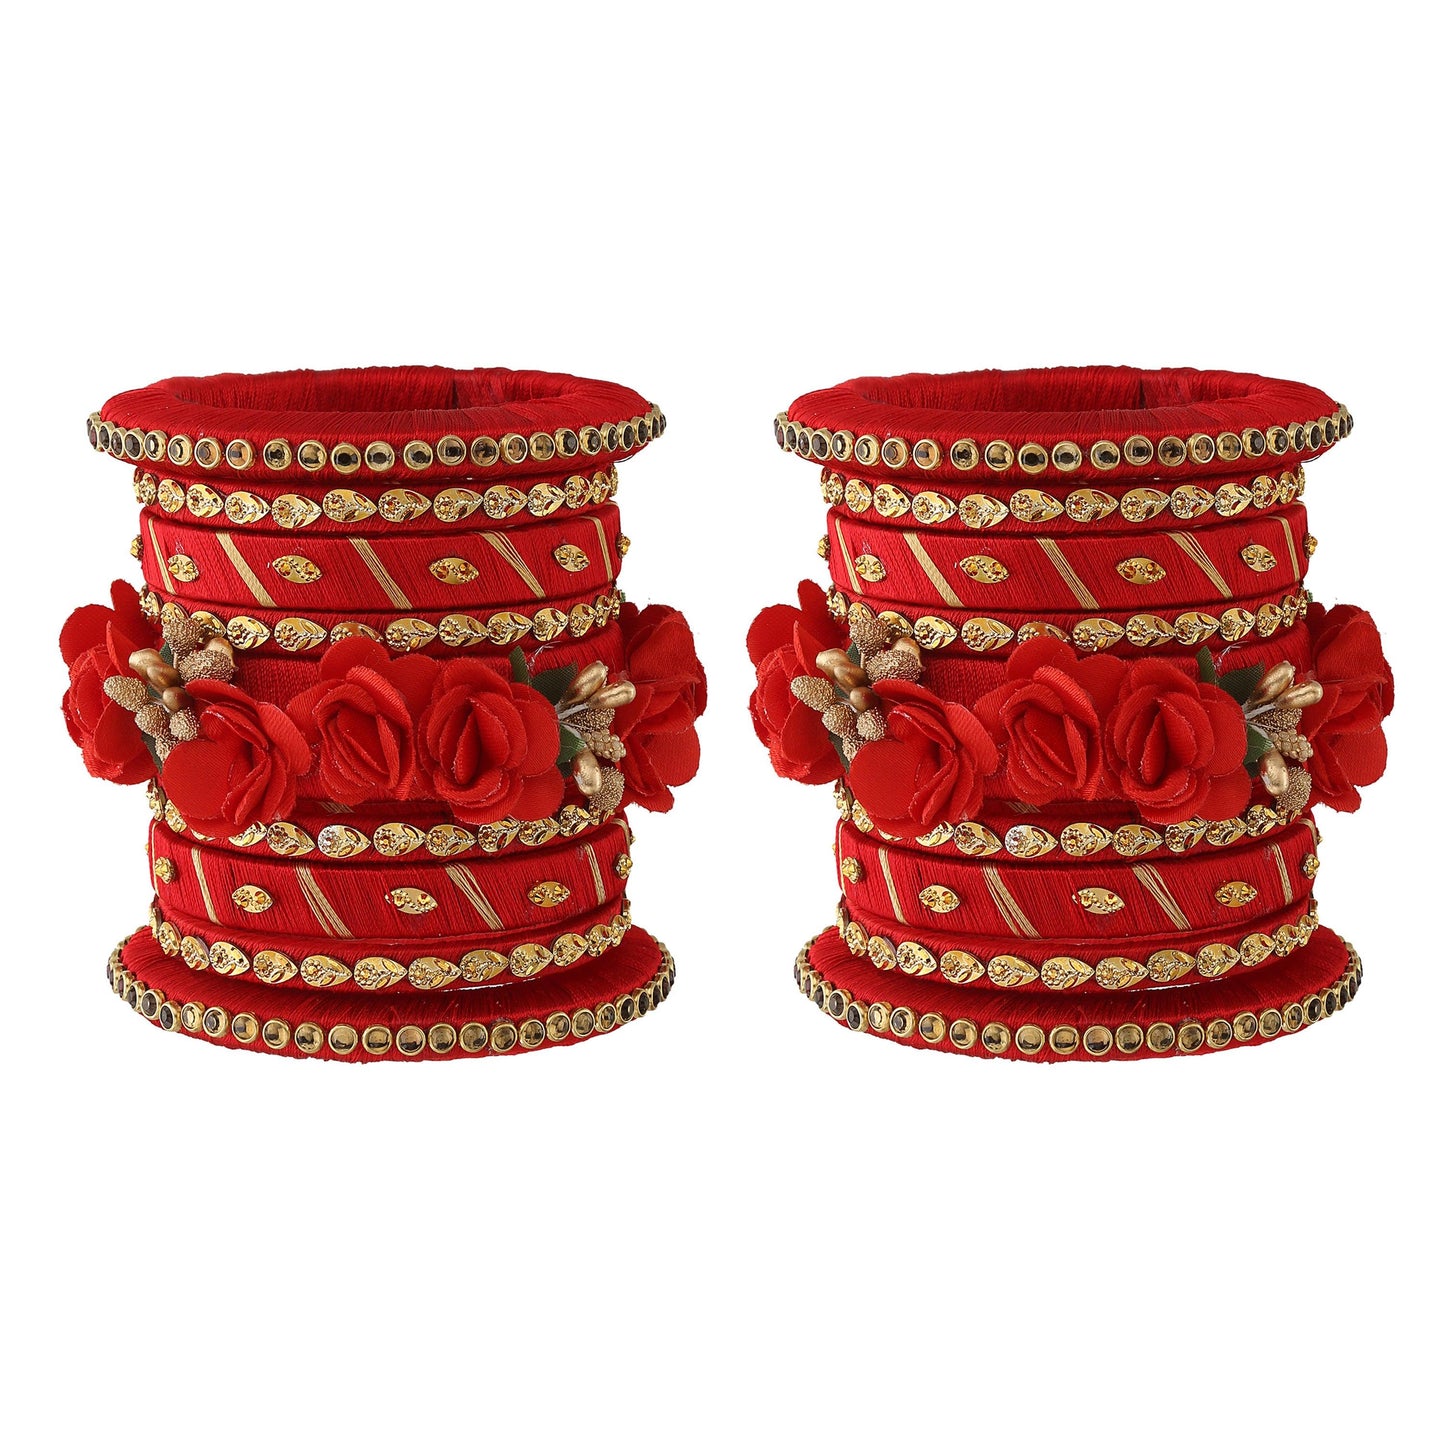 sukriti stylish handmade red flower designer silk thread plastic bridal chuda wedding bangles for women – set of 18